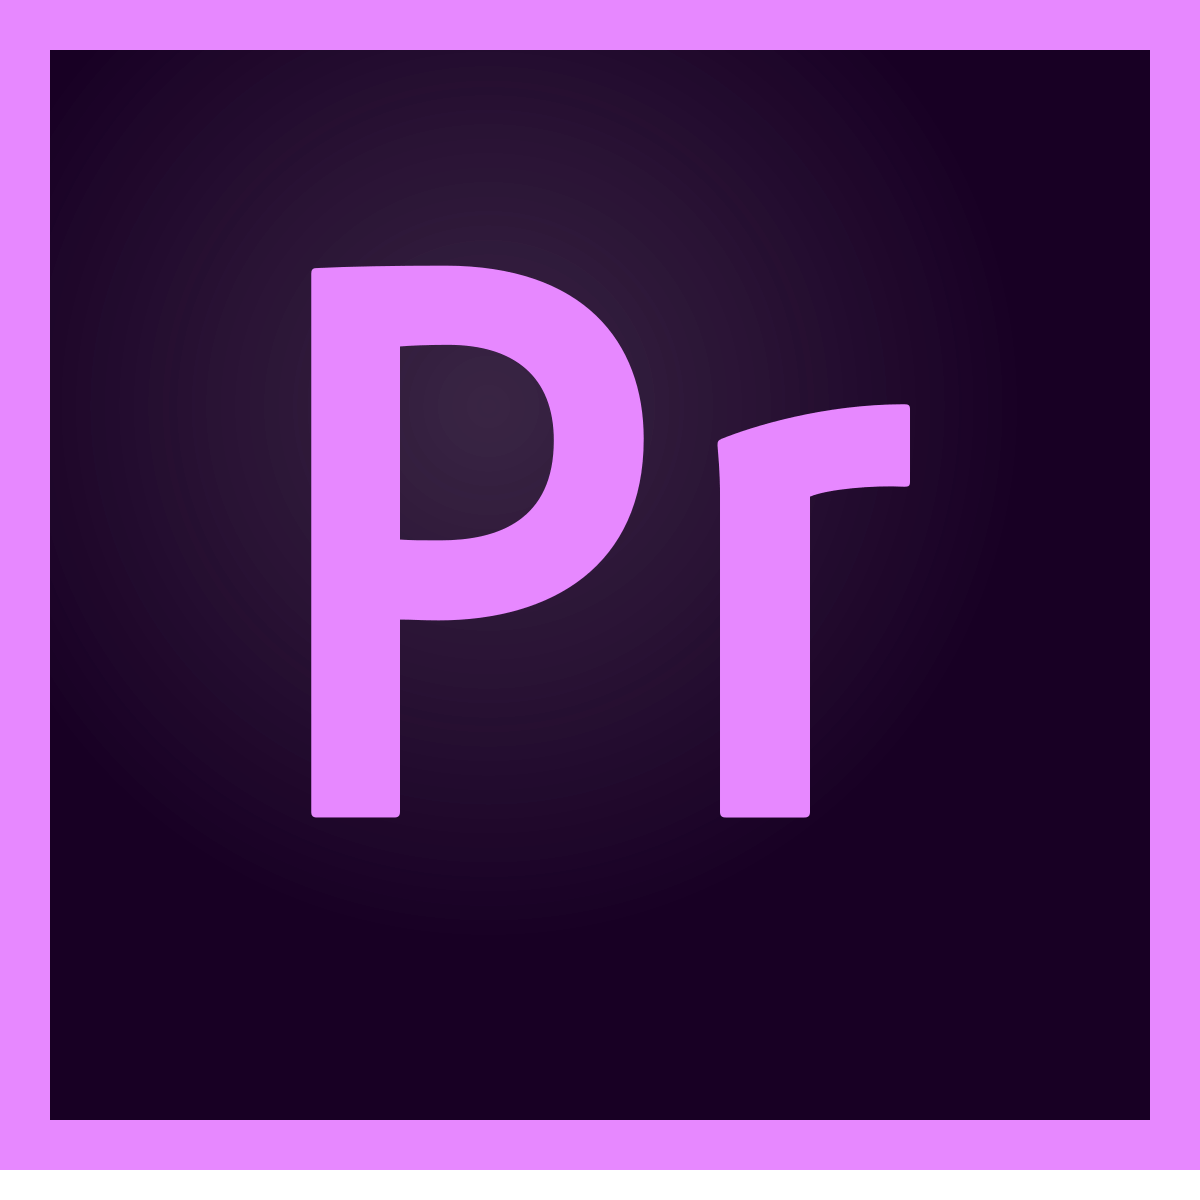 download the last version for apple Adobe Premiere Pro